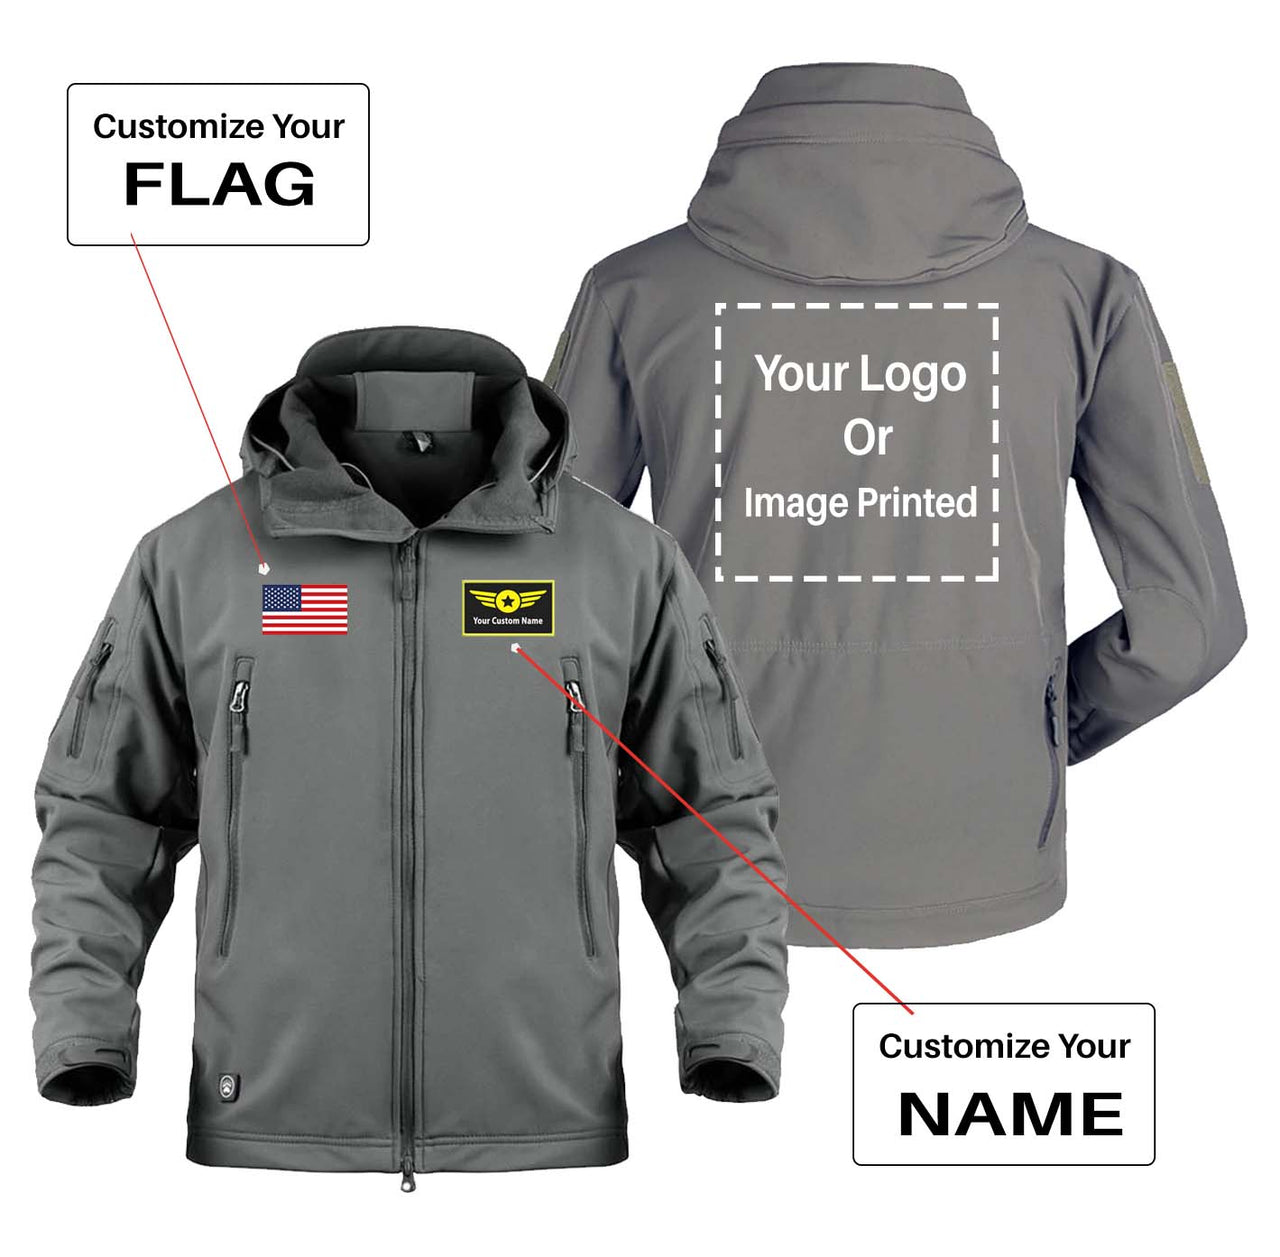 Custom Your Name & Flag & Logo (1) Designed Military Jackets